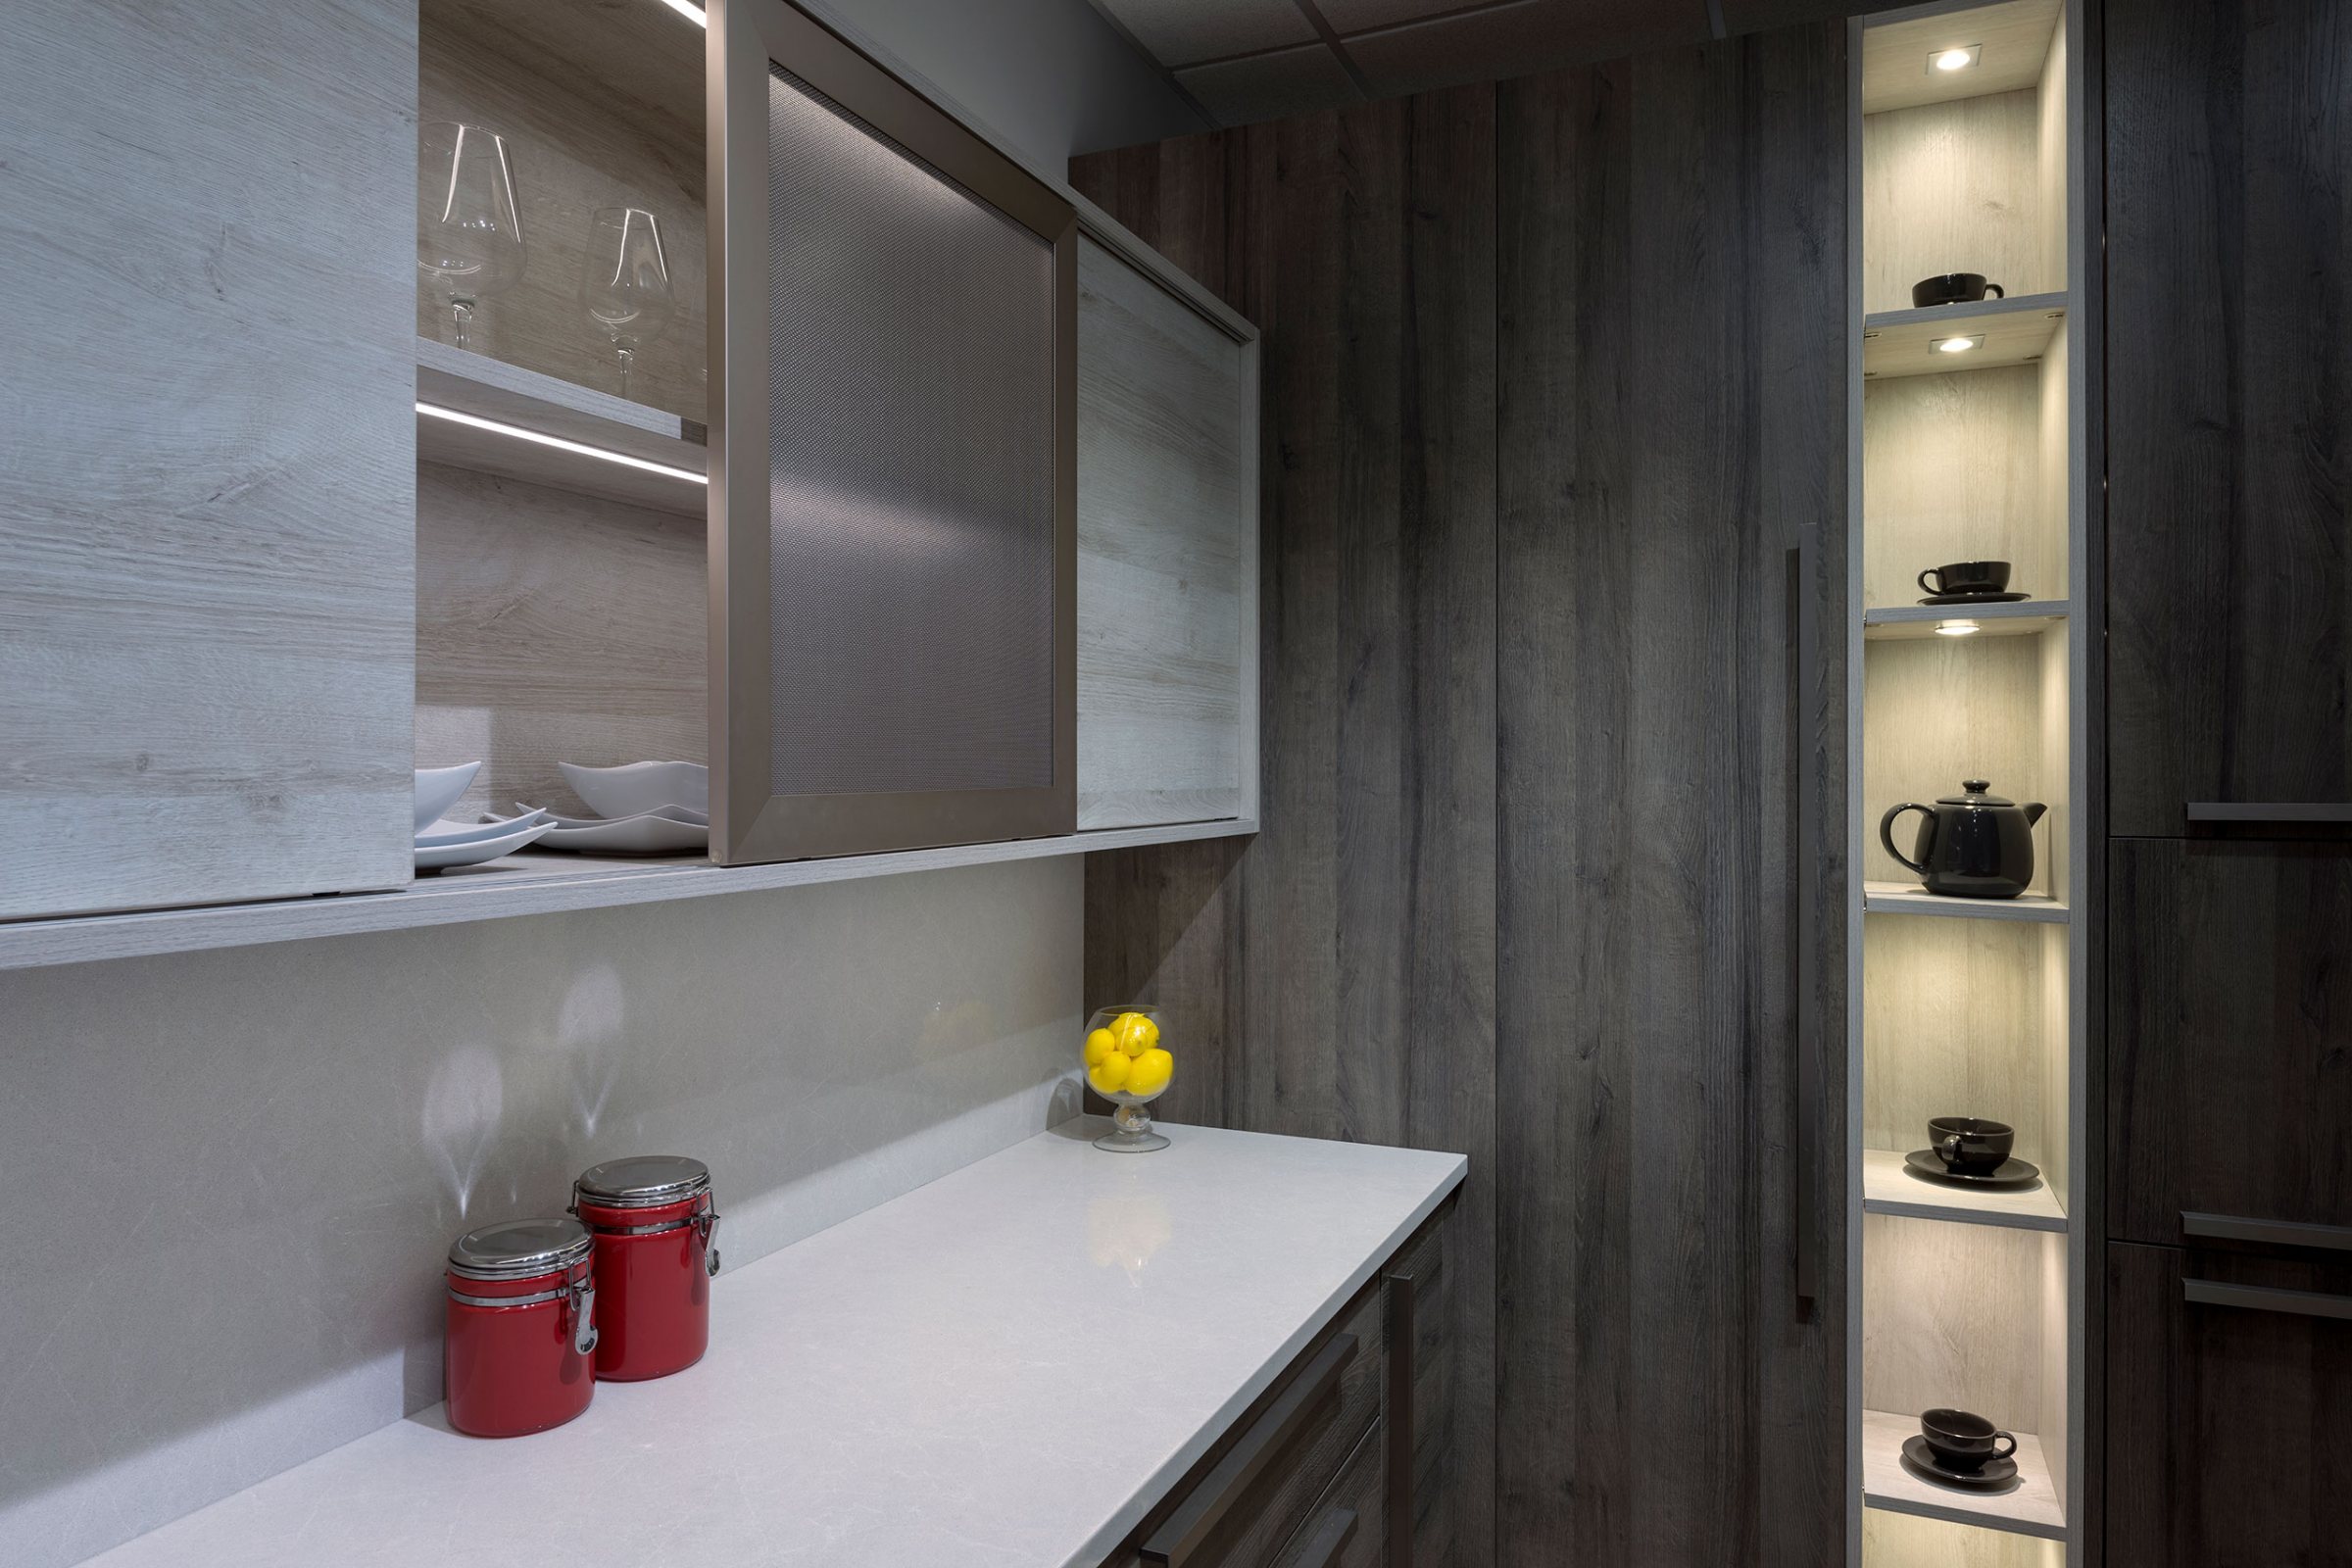 https://www.advancedcabinetscorp.com/wp-content/gallery/decor-melamine-modern-cabintes/decor-melamine-modern-cabinets-side-view.jpg